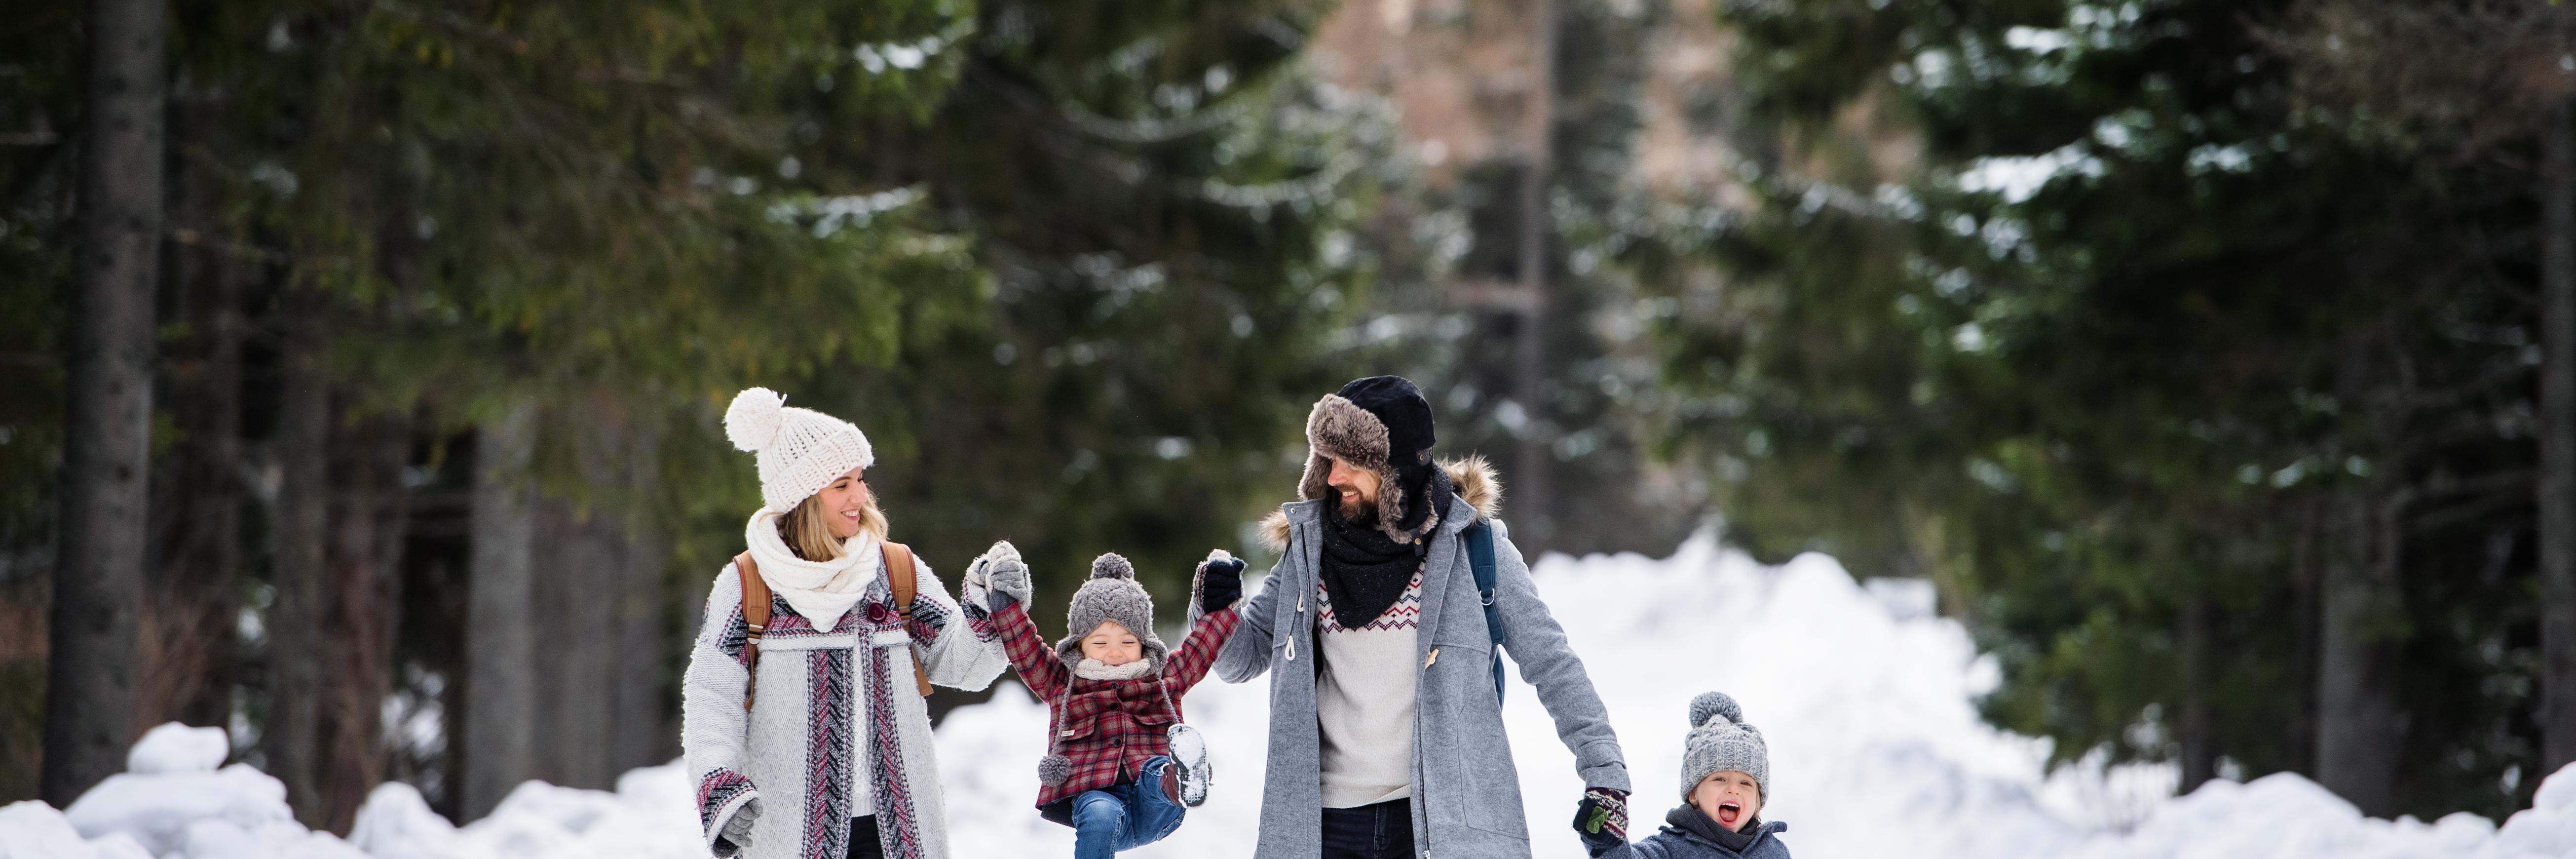 Family walk winter snow